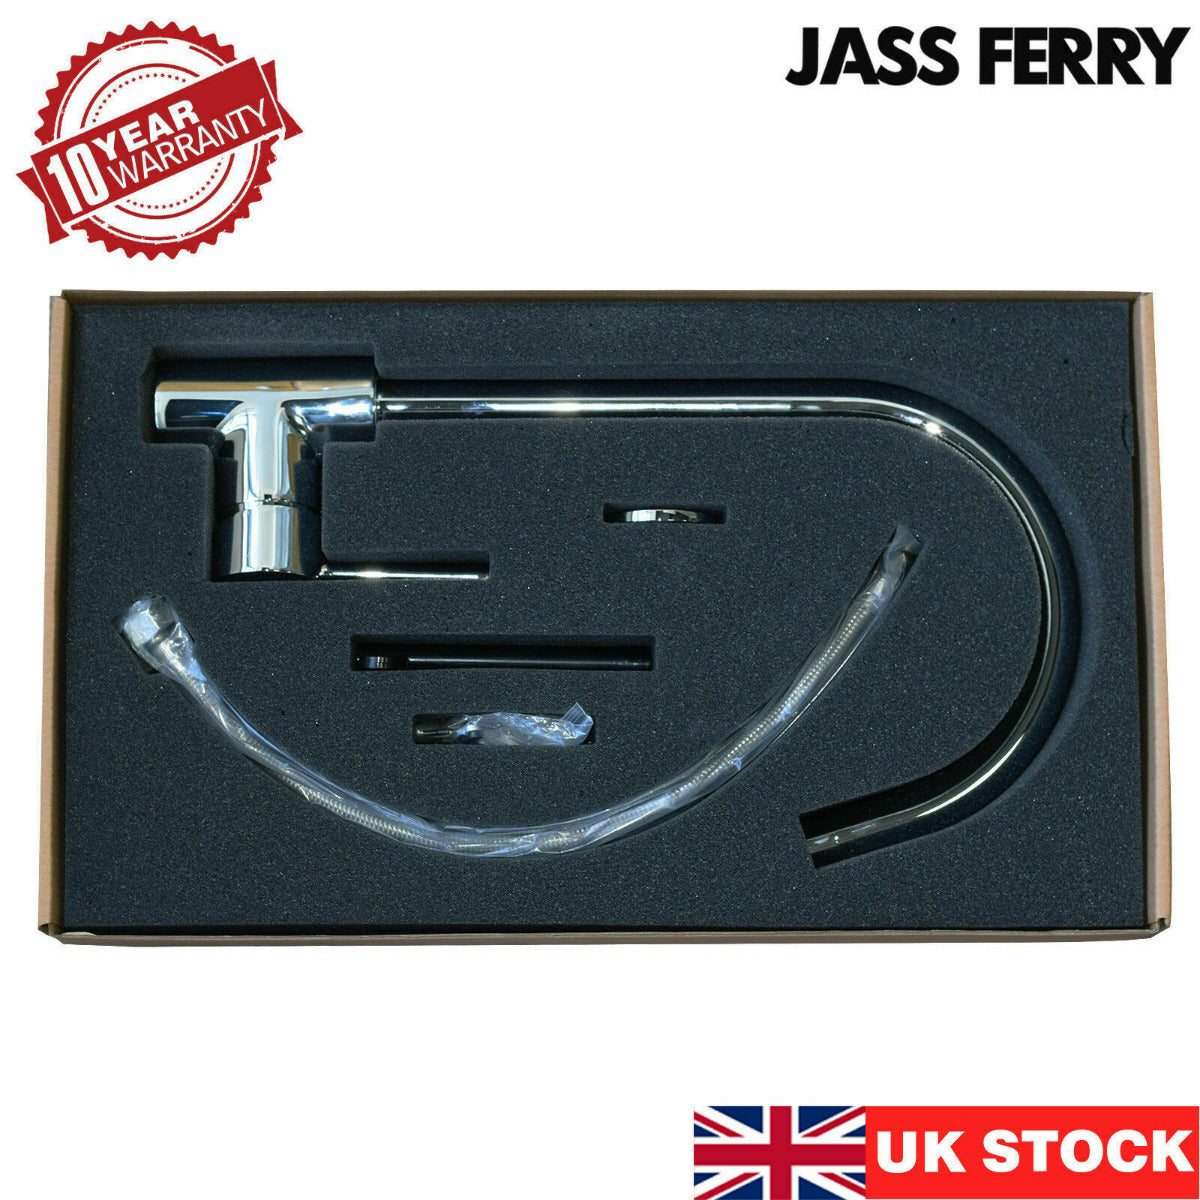 JassferryJASSFERRY New Sink Tap Monobloc Brass Mixer Single Lever Swivel Round FaucetKitchen taps